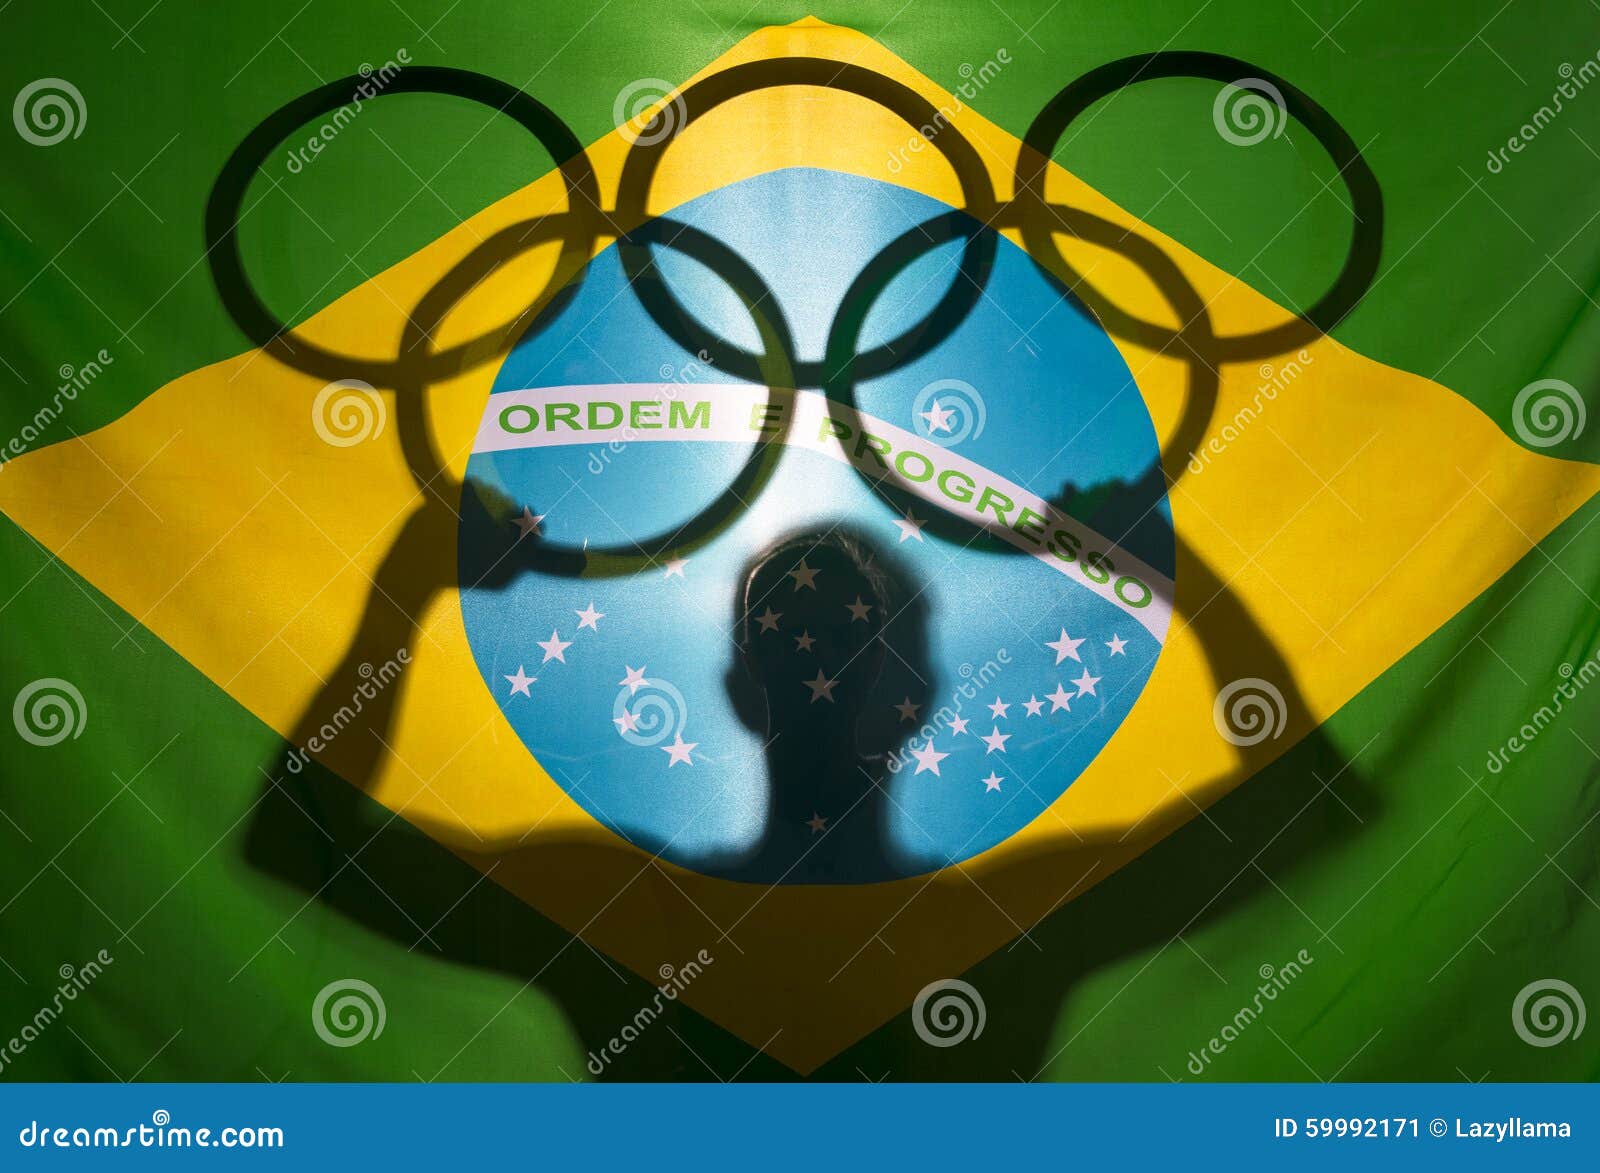 Mastercard vs Audi vs Olympic games 4.1.1. Balance The logo exhibits a... |  Download Scientific Diagram